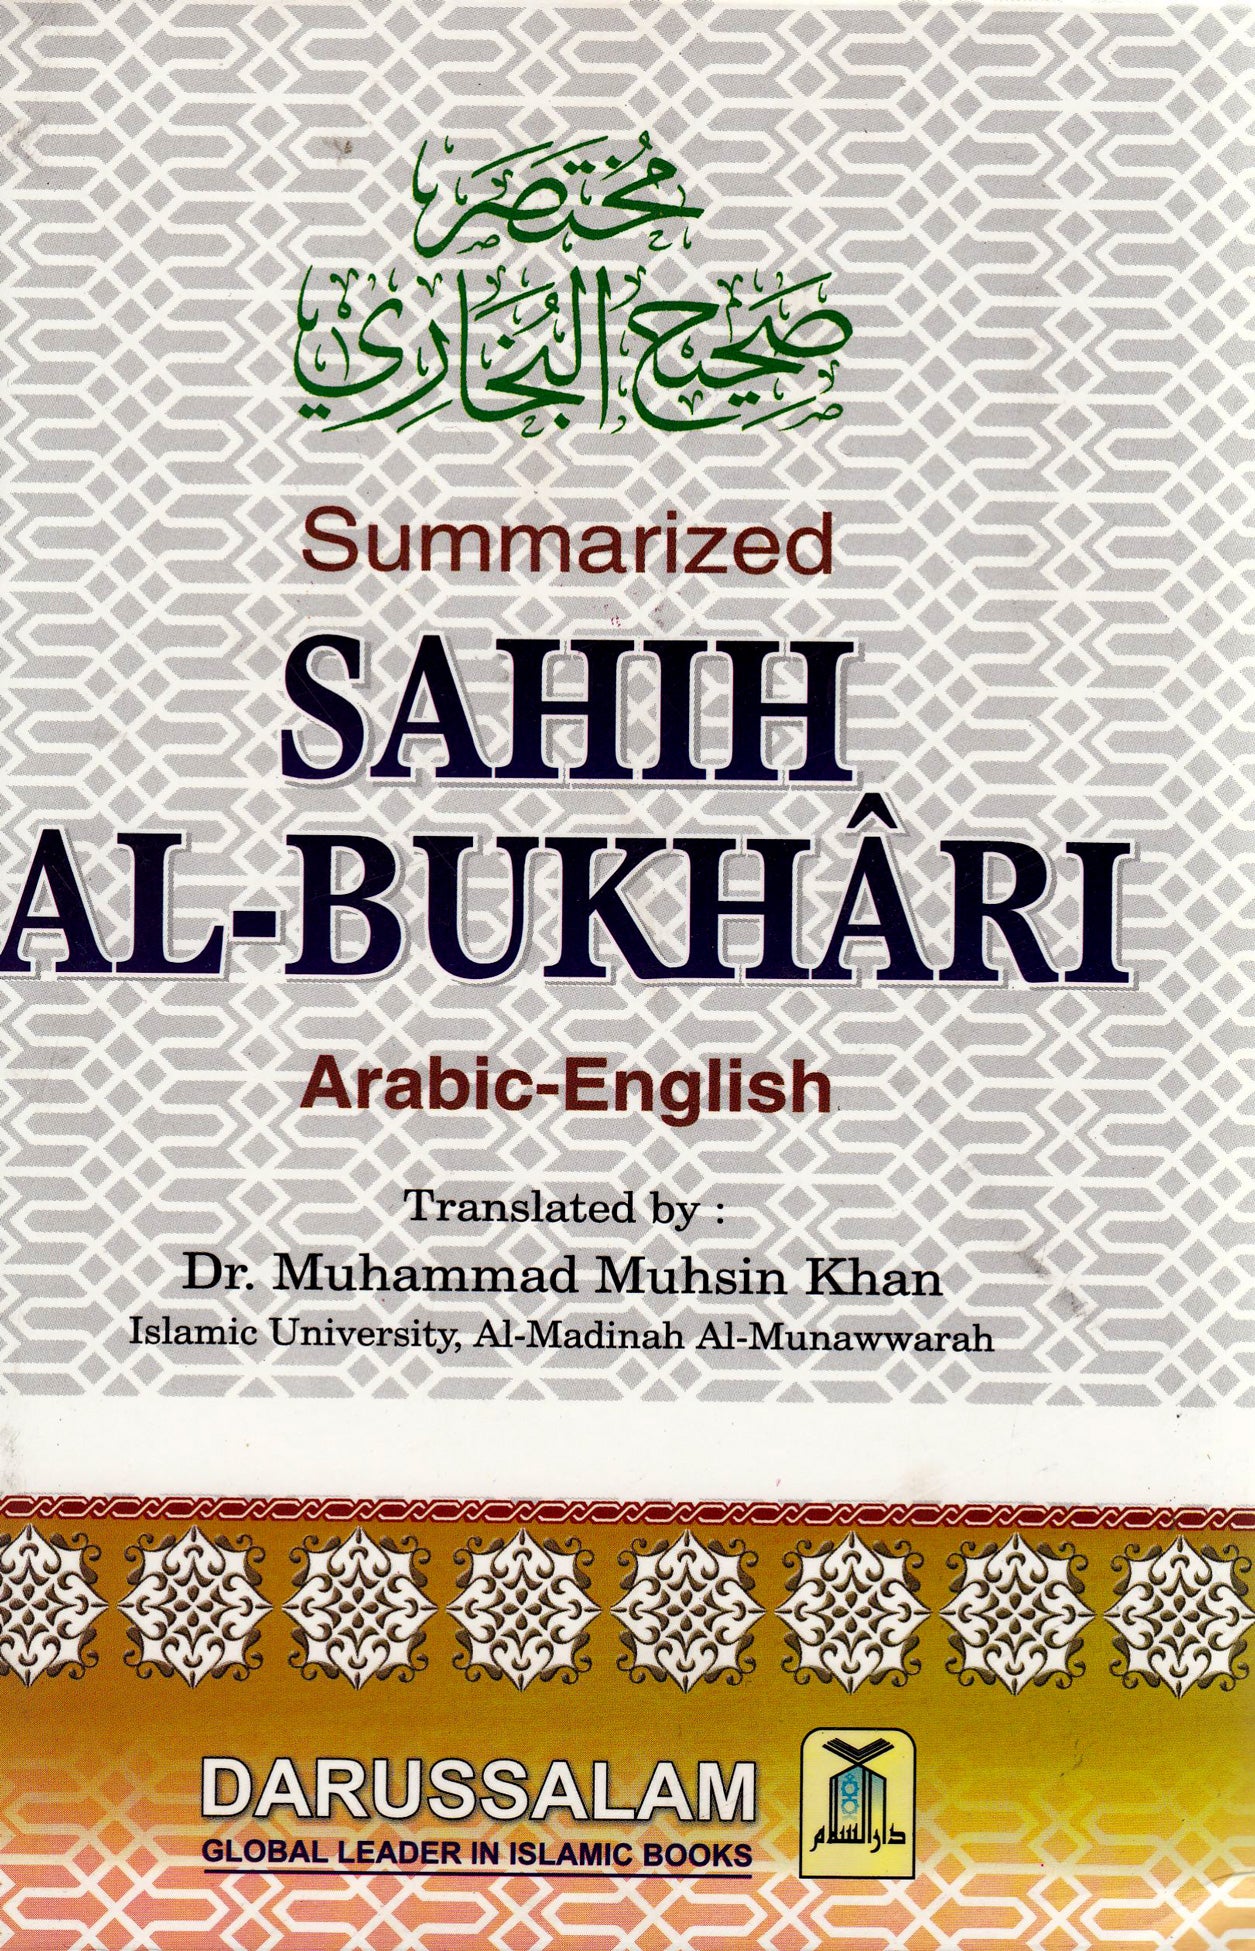 Summarized Sahih Al-Bukhari (Large Paperback) approx 6" x 9"